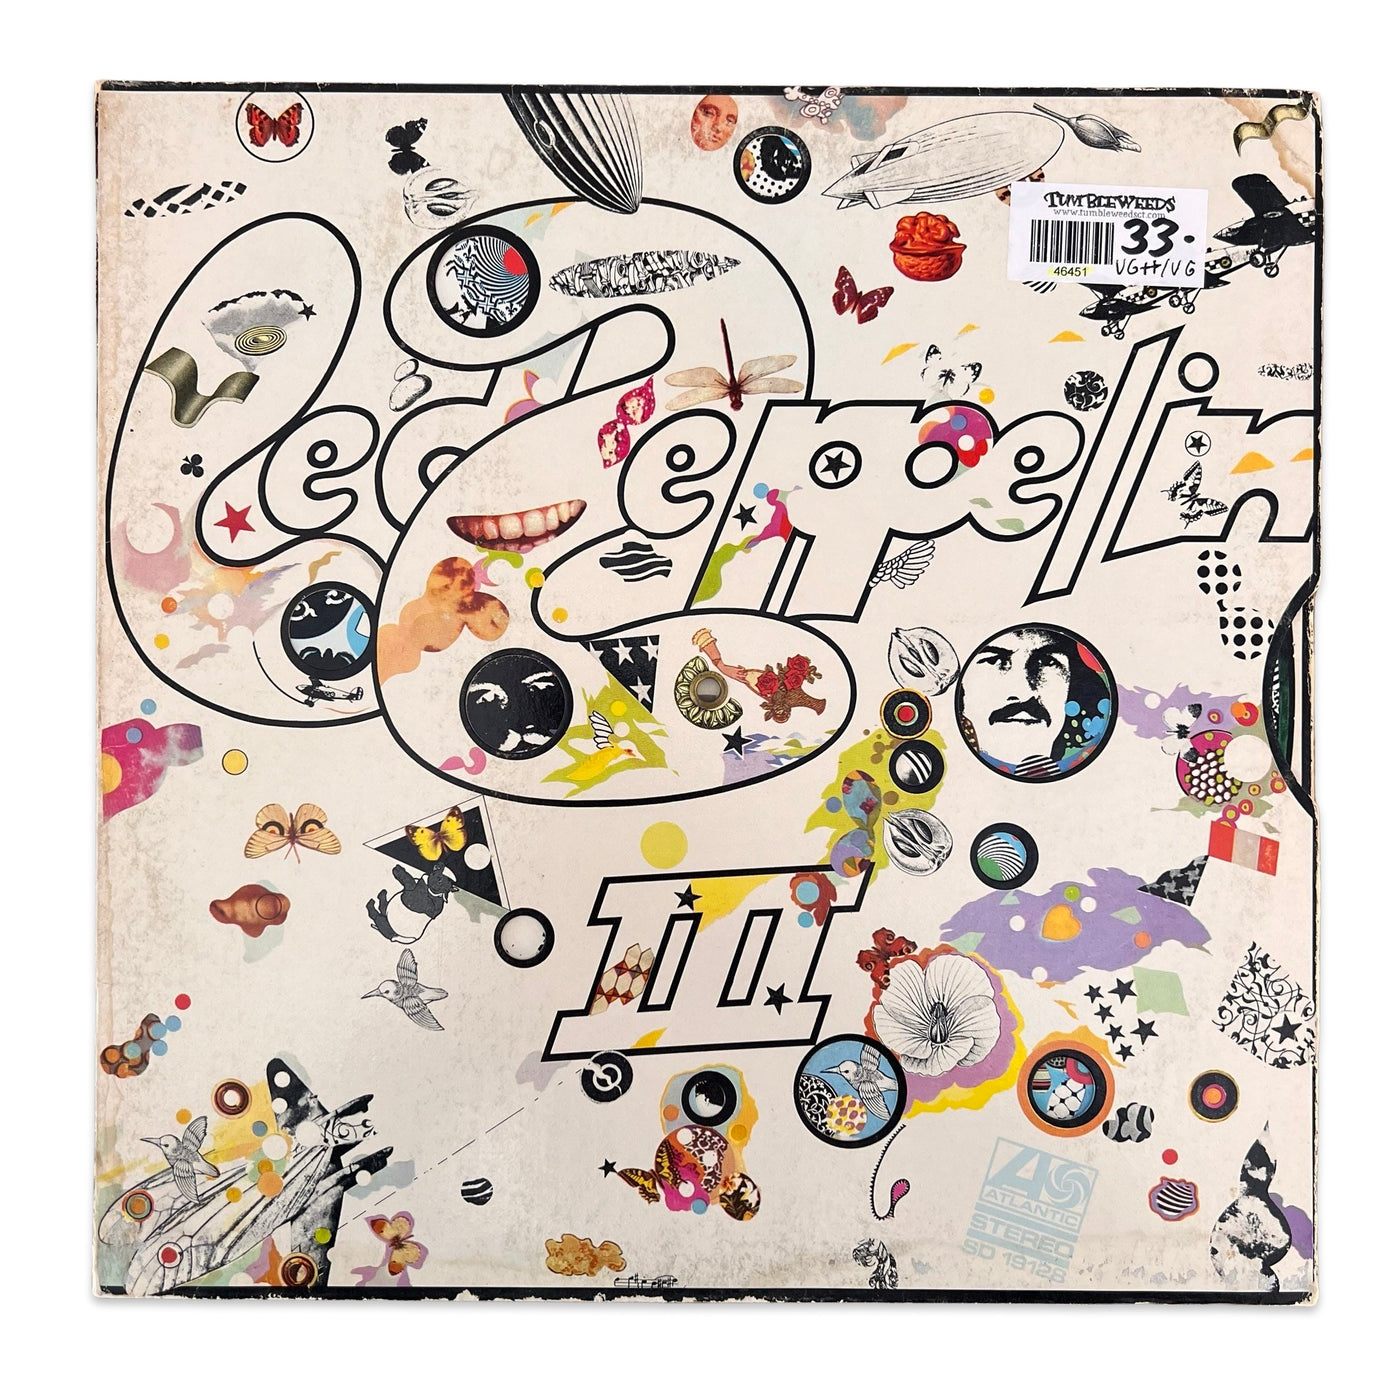 Led Zeppelin – Led Zeppelin III (1970 Presswell)